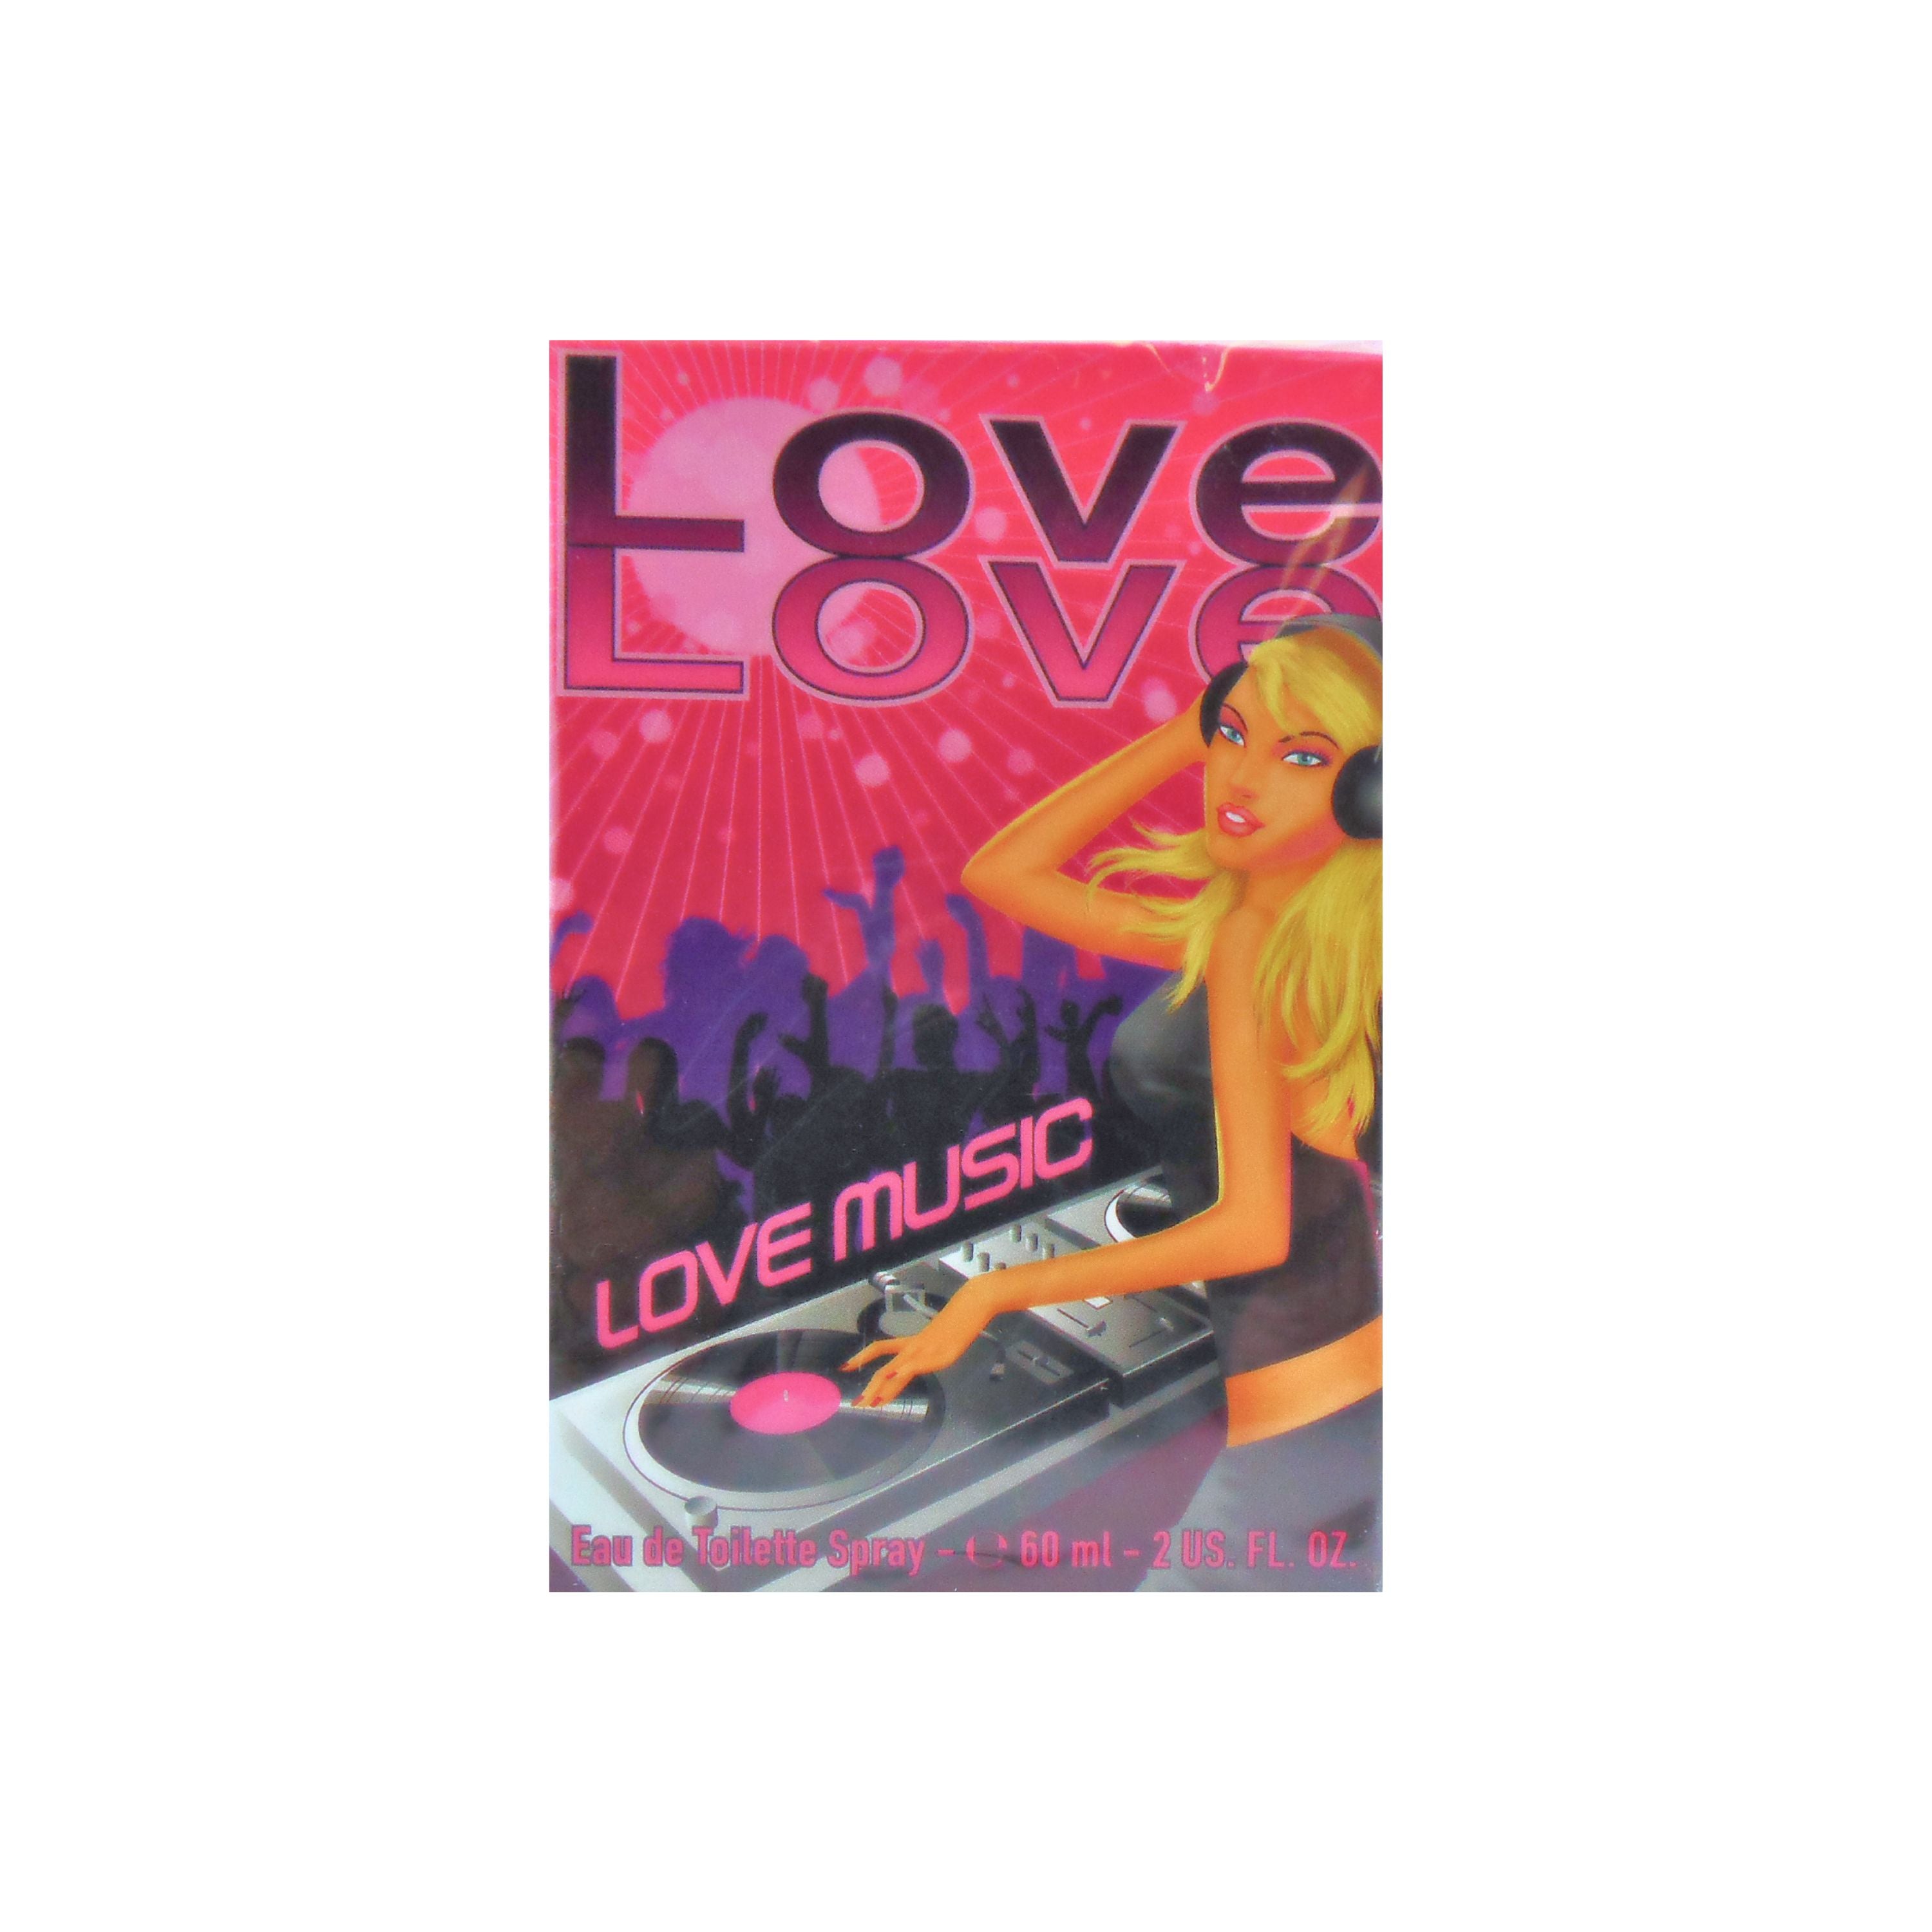 Cofinluxe Love Love Music Eau de Toilette for Women